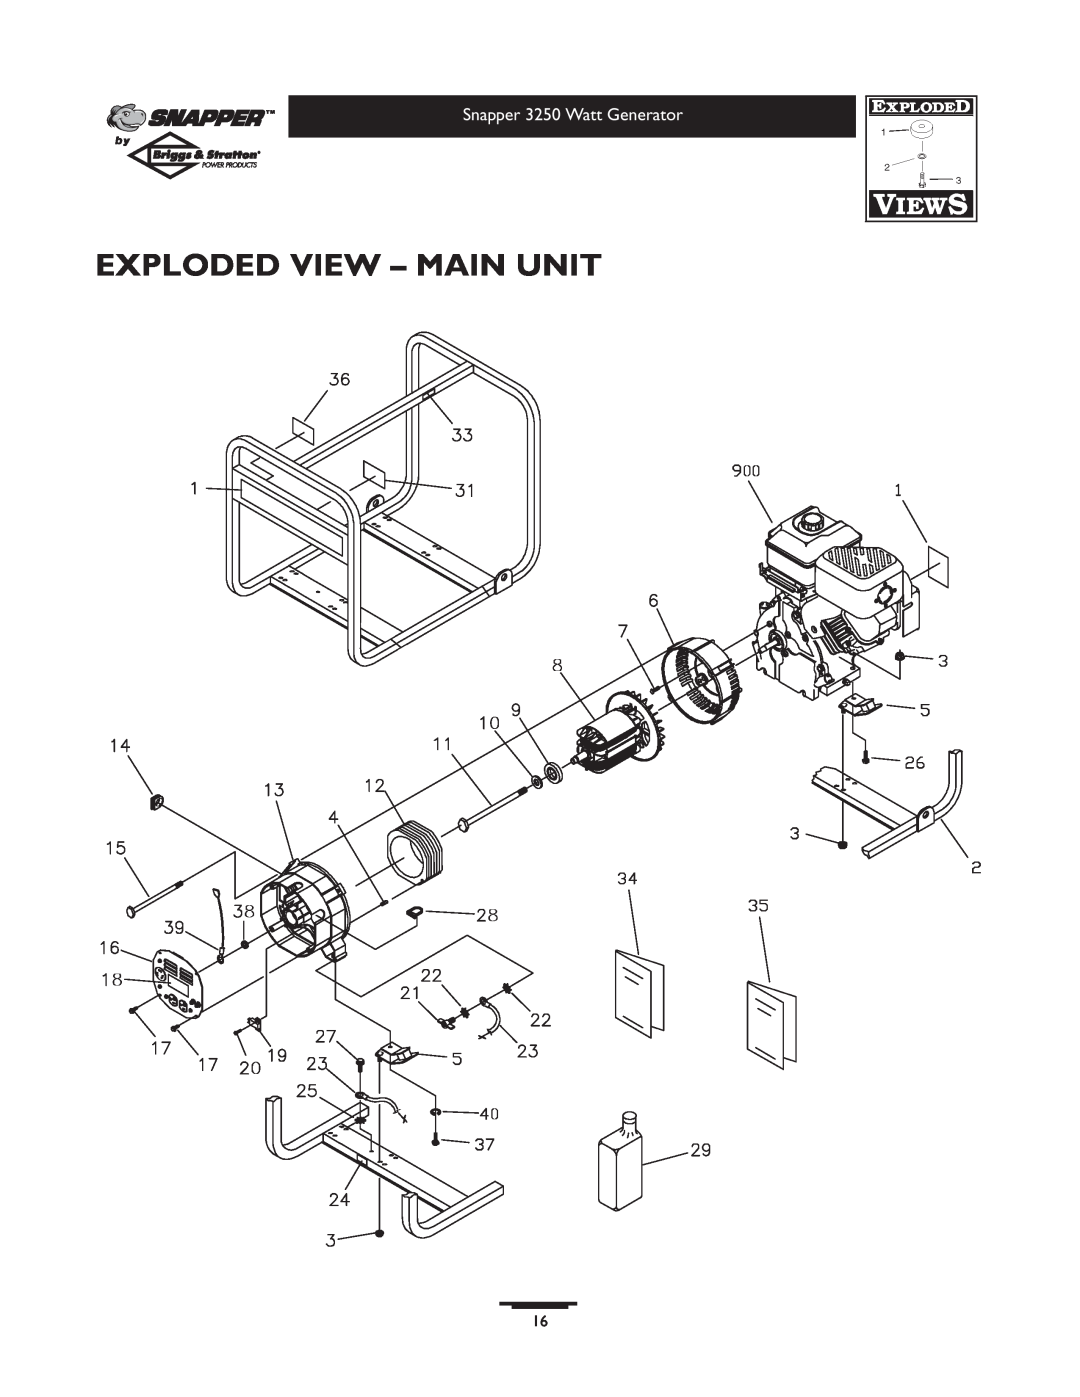 Snapper owner manual Exploded View - Main Unit, Snapper 3250 Watt Generator 